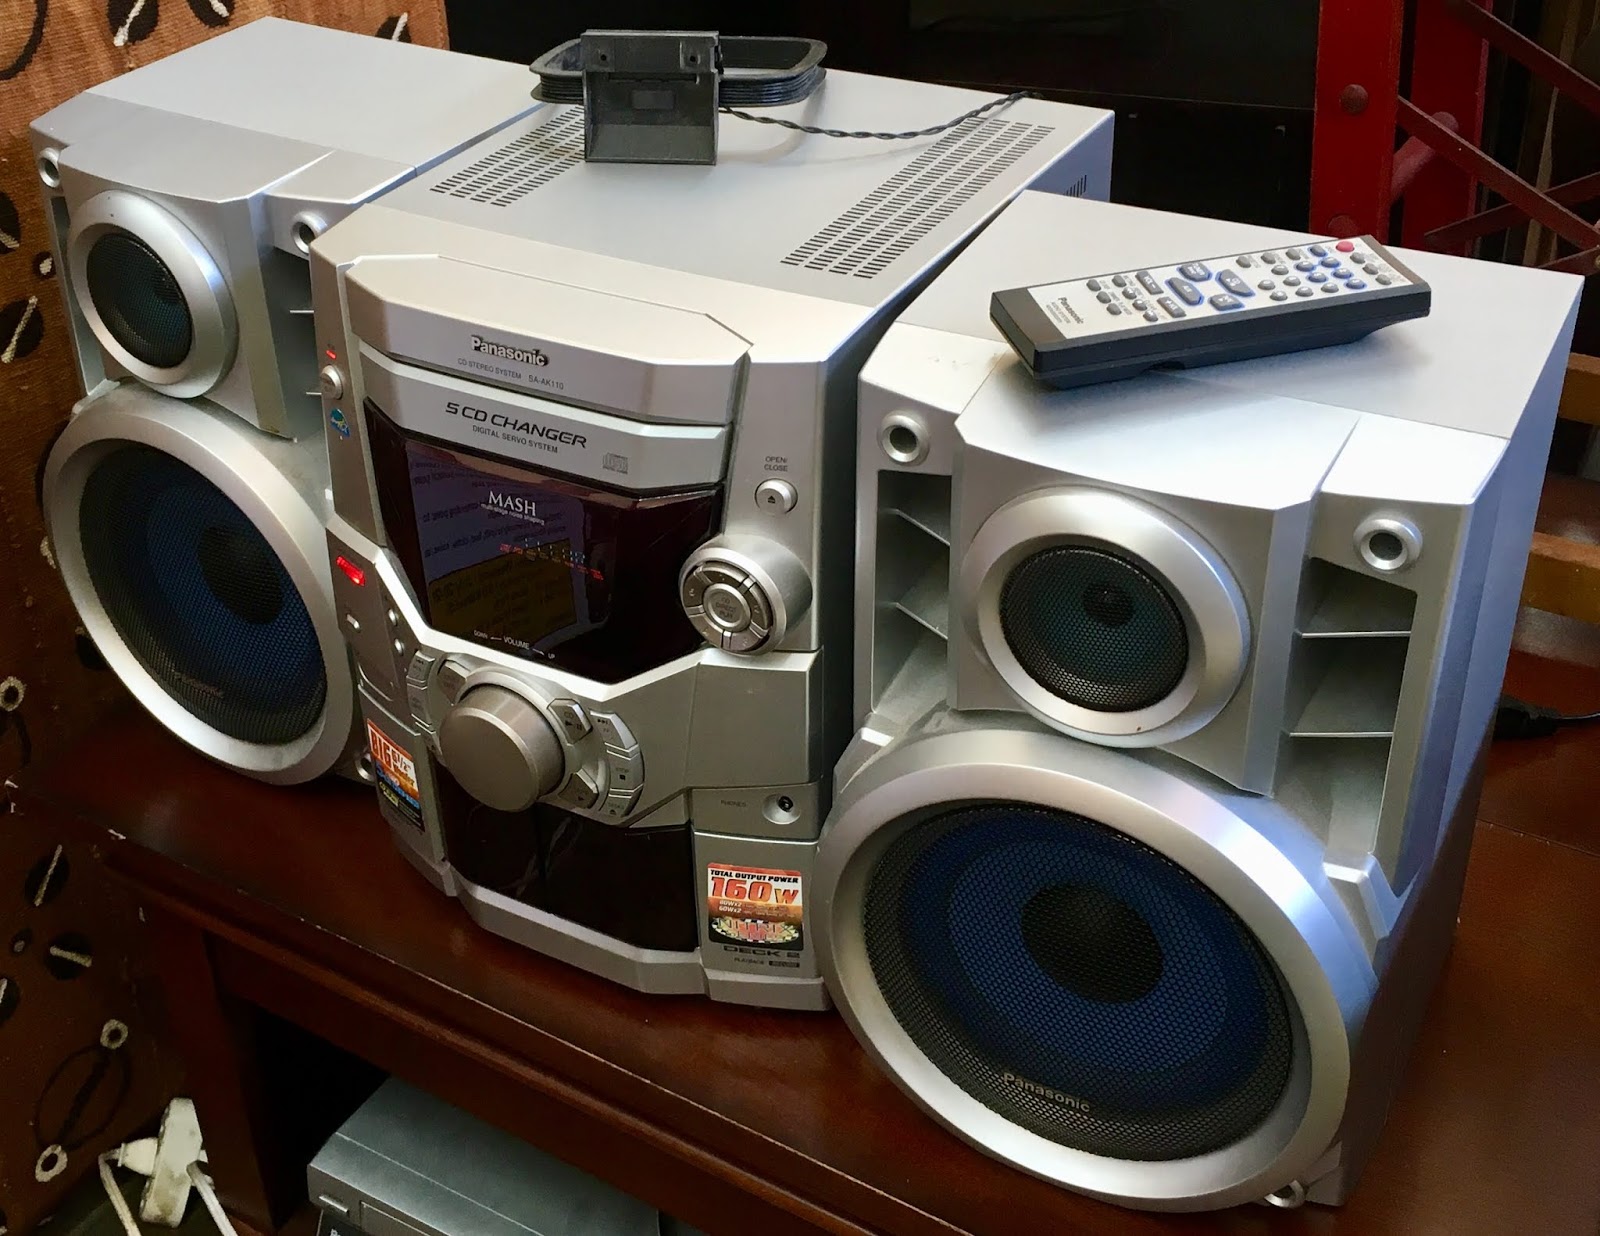 Uhuru Furniture & Collectibles: Panasonic 5 CD Changer Stereo System